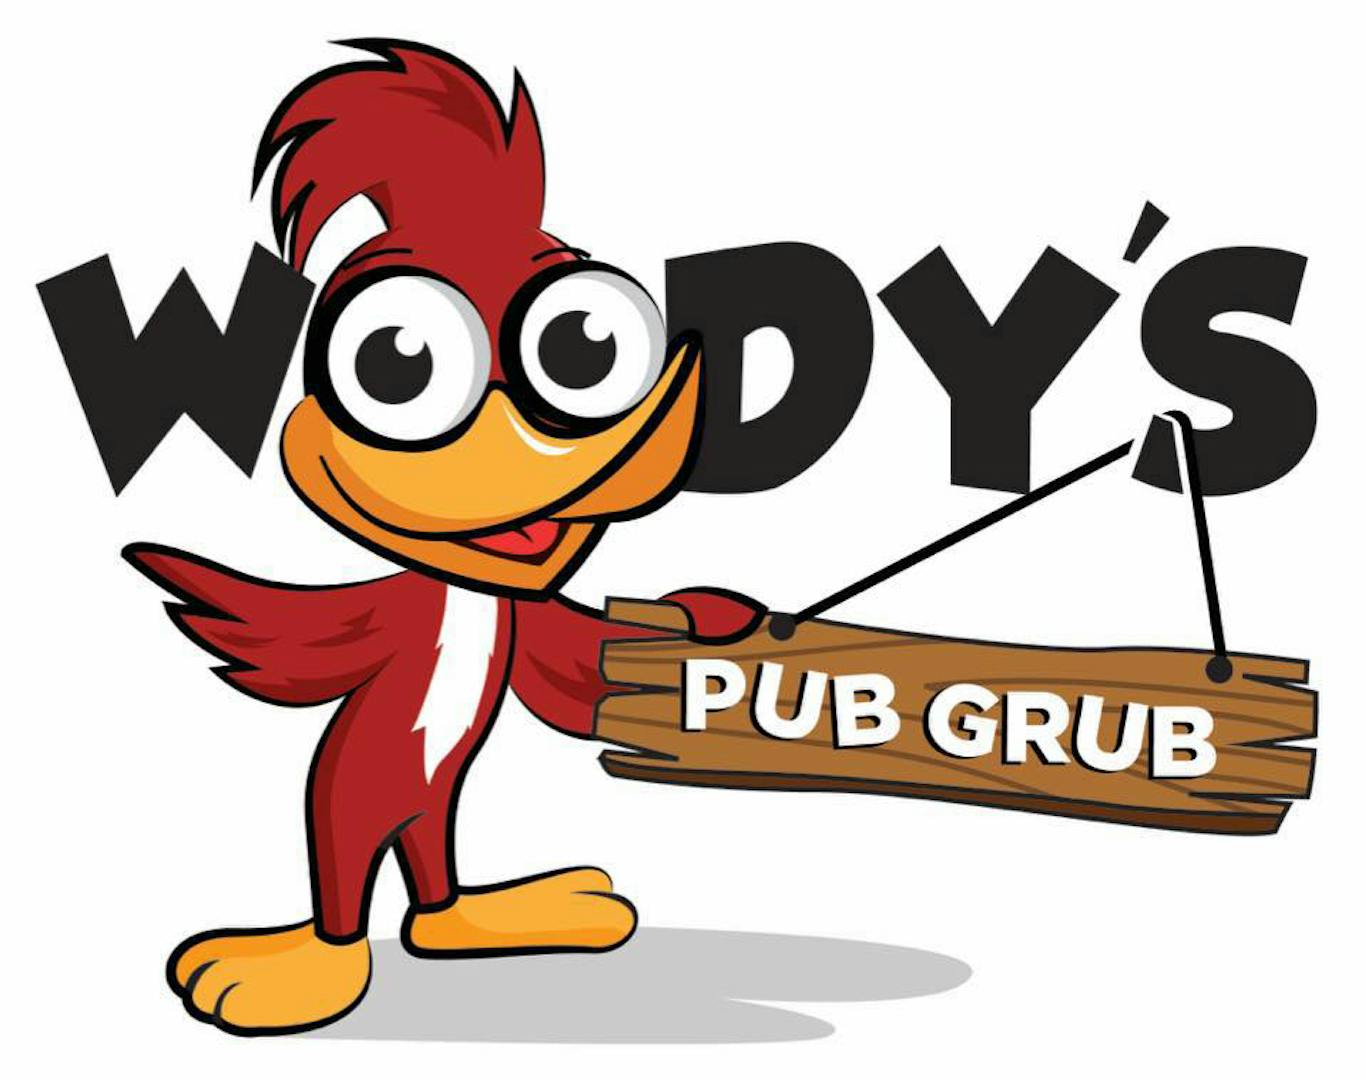 Woody's Pub Grub